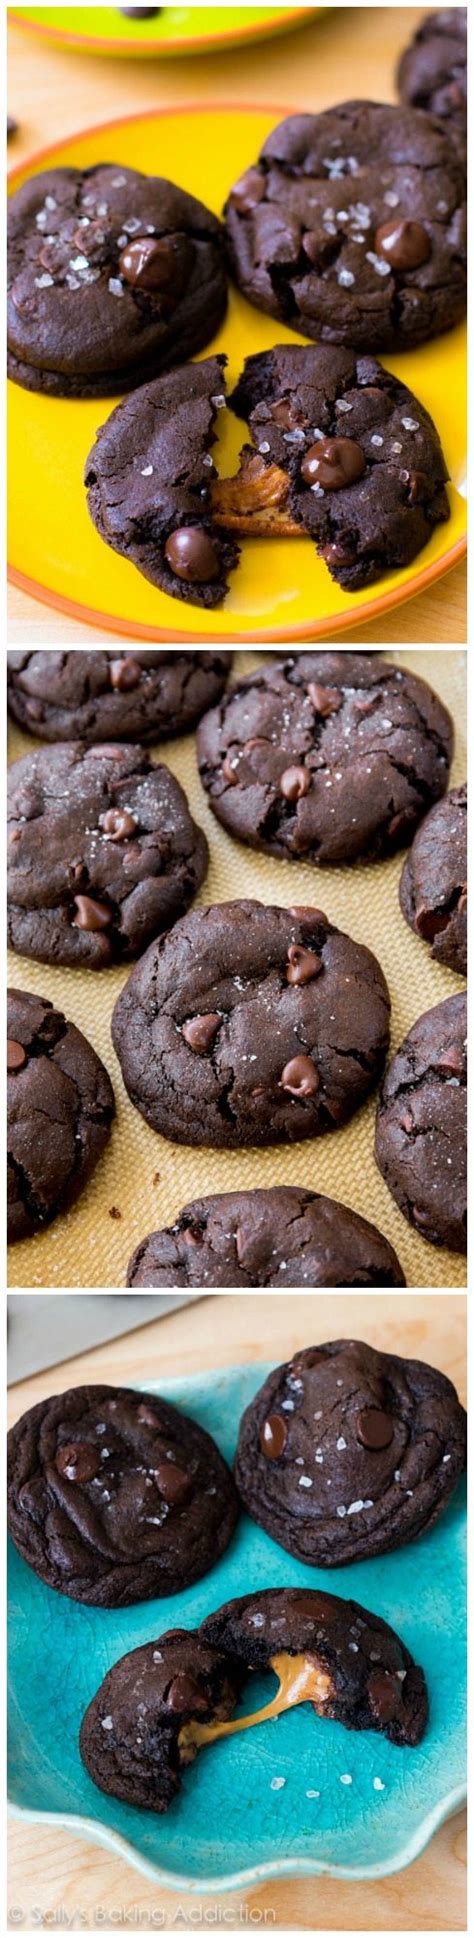 Salted Caramel Dark Chocolate Cookies Sallys Baking Addiction